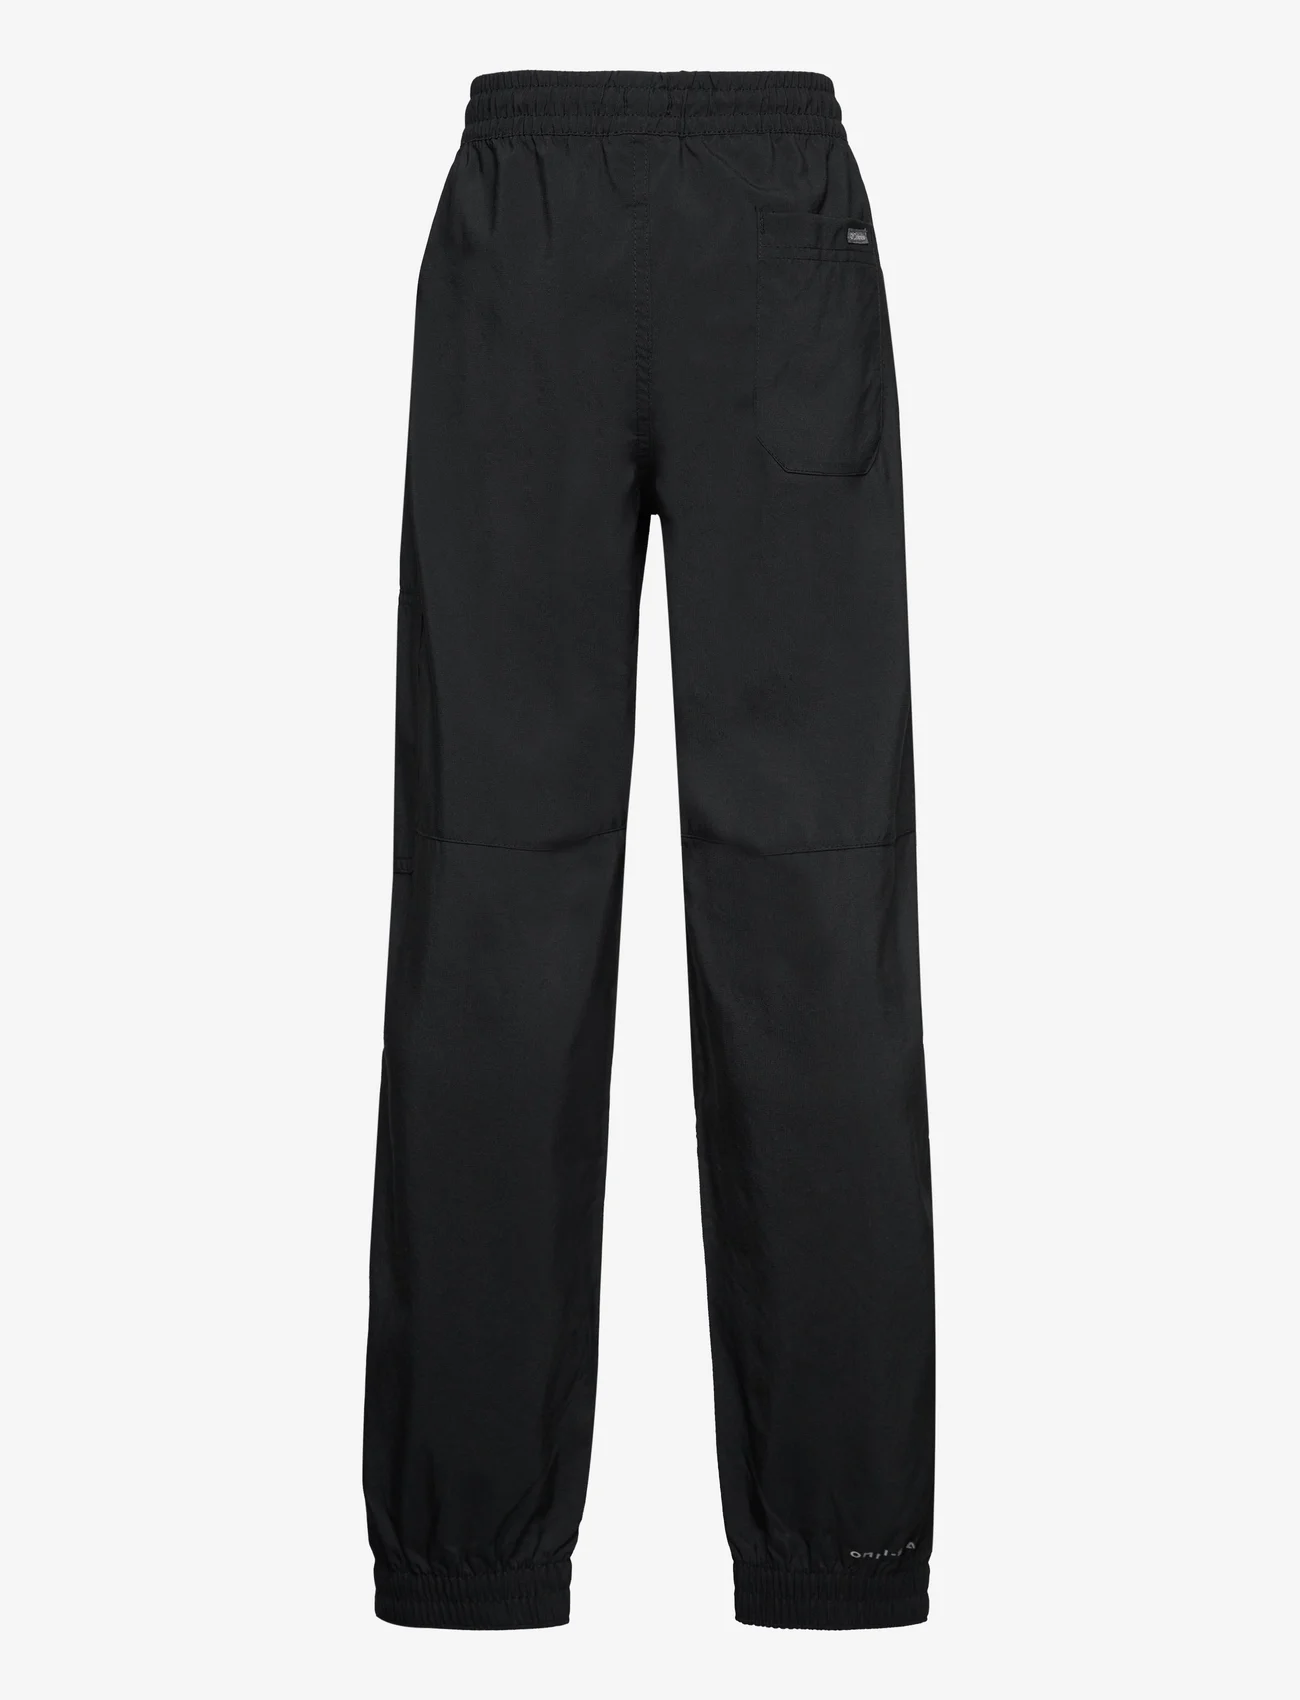 Columbia Sportswear - Silver Ridge Utility Cargo Pant - outdoorhosen - black - 1